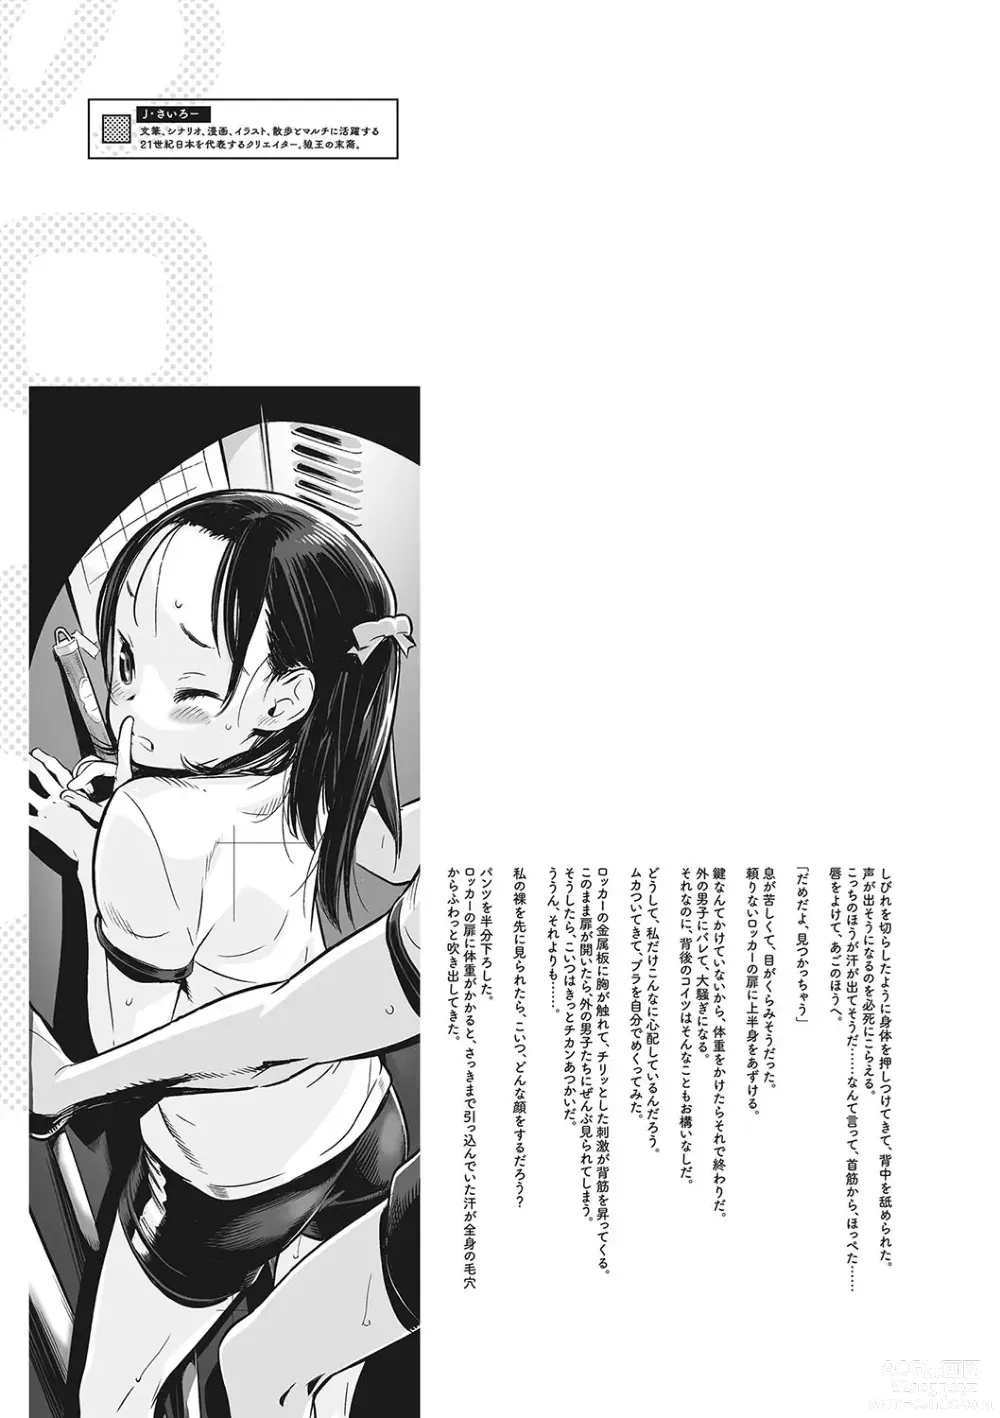 Page 94 of manga Little Girl Strike Vol. 29